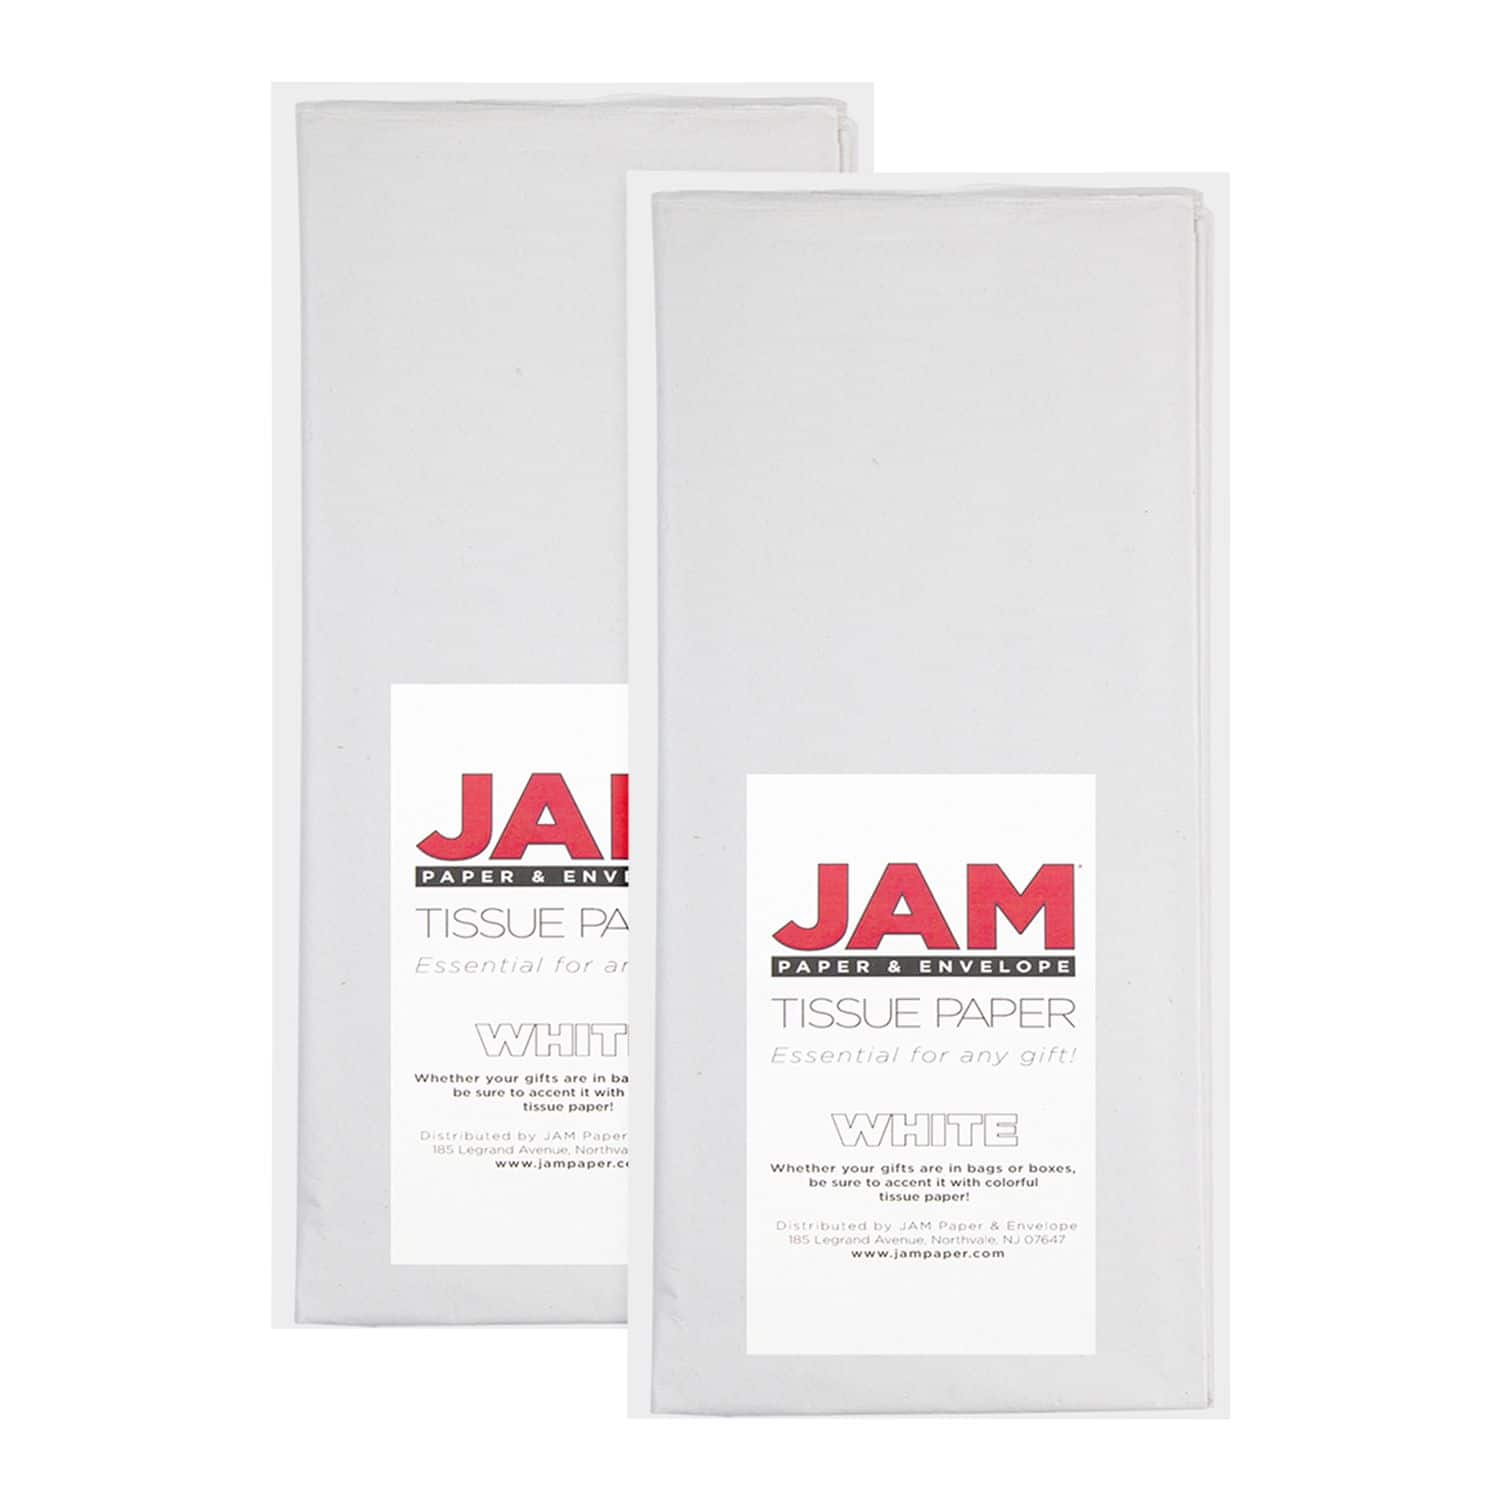 JAM Paper 20" x 26" Tissue Paper, 2 Packs of 10 Sheets